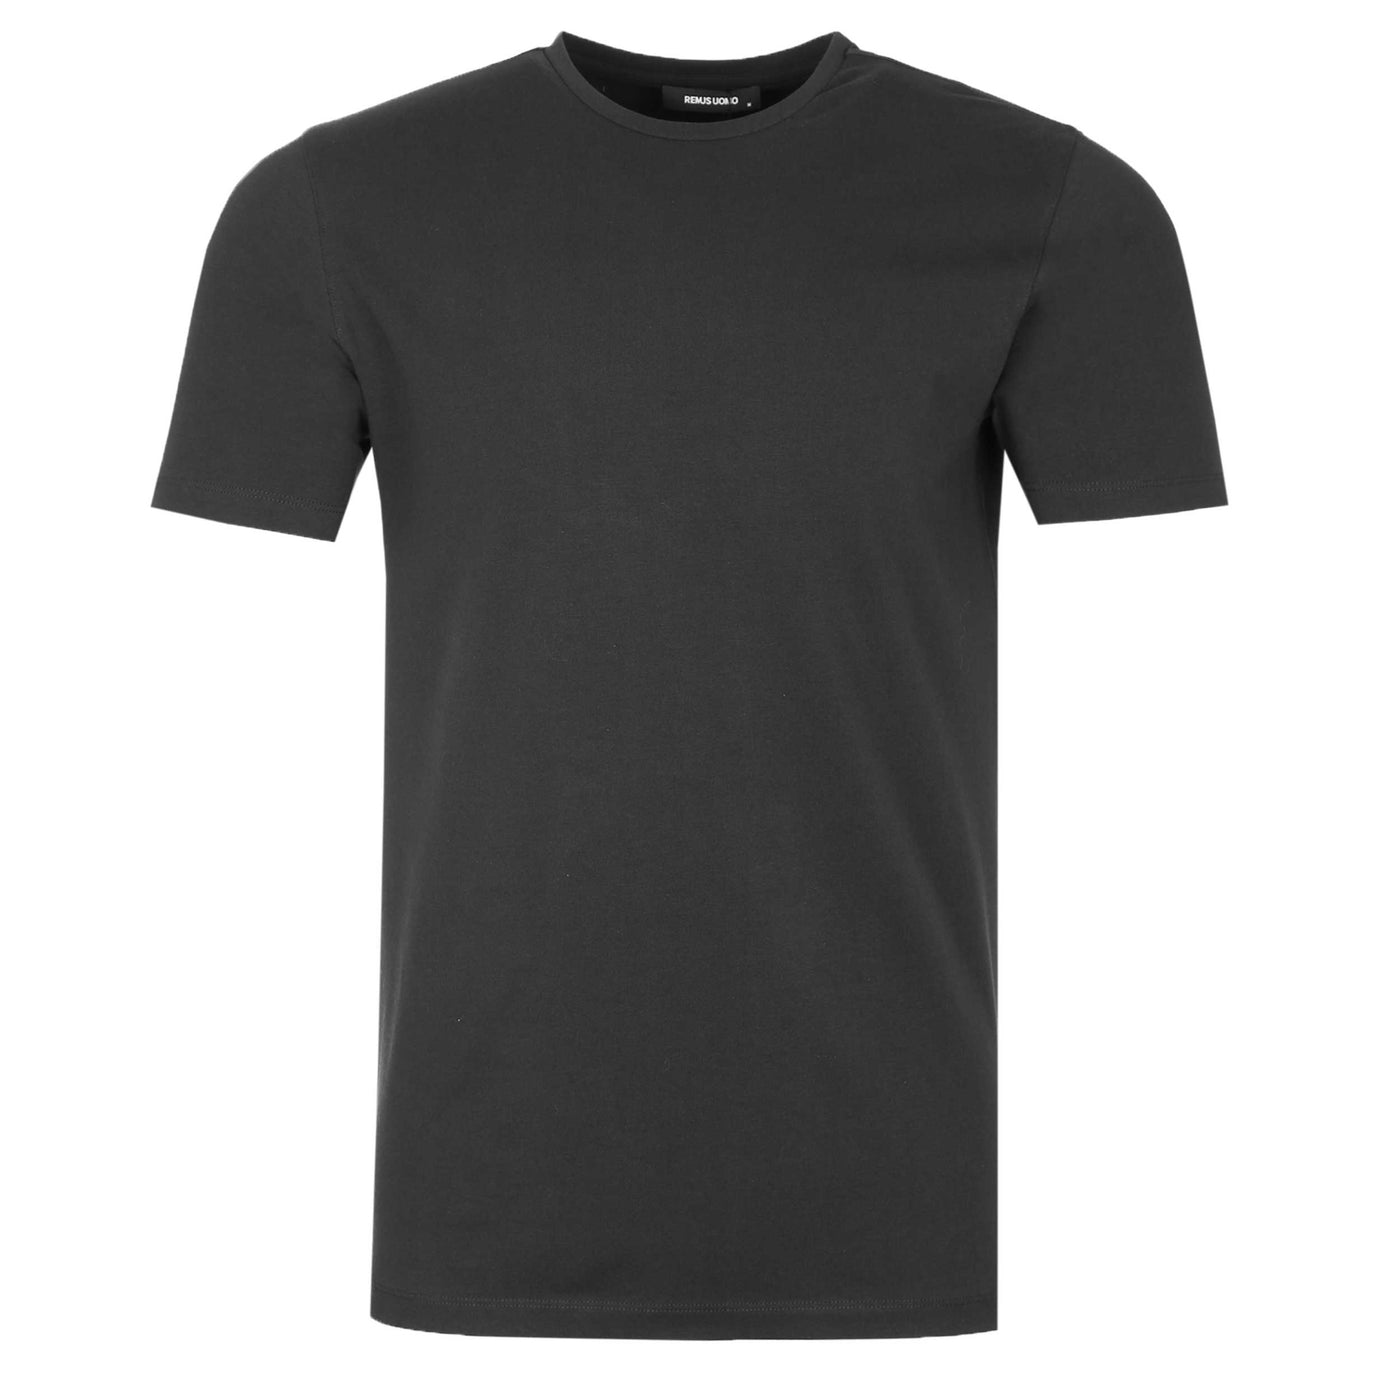 Remus Uomo Basic Crew Neck T-Shirt in Black